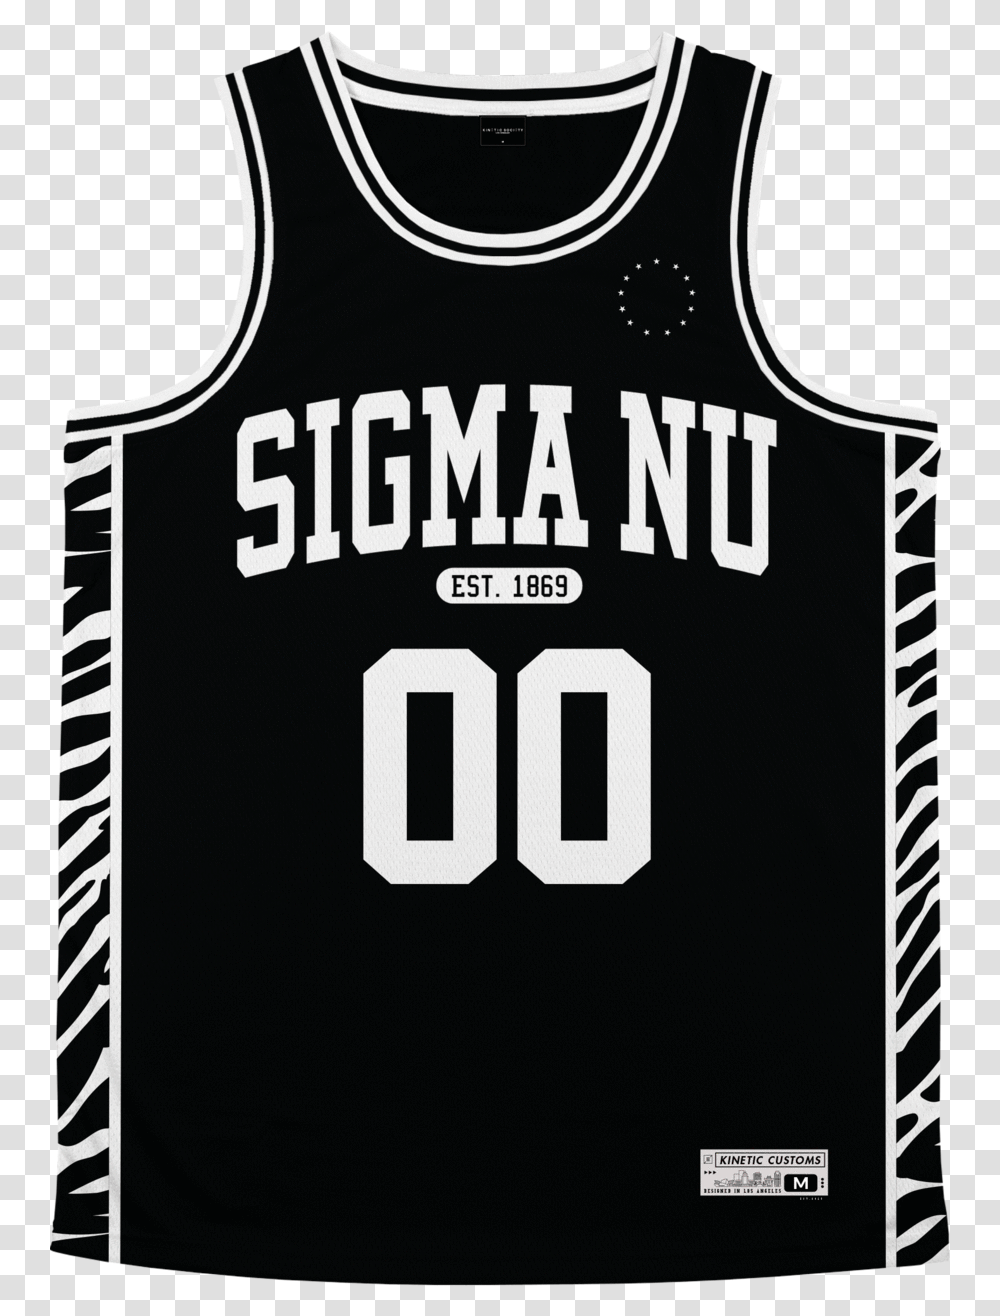 Sigma Nu Zebra Flex Basketball Jersey Jersey, Clothing, Apparel, Shirt, Poster Transparent Png